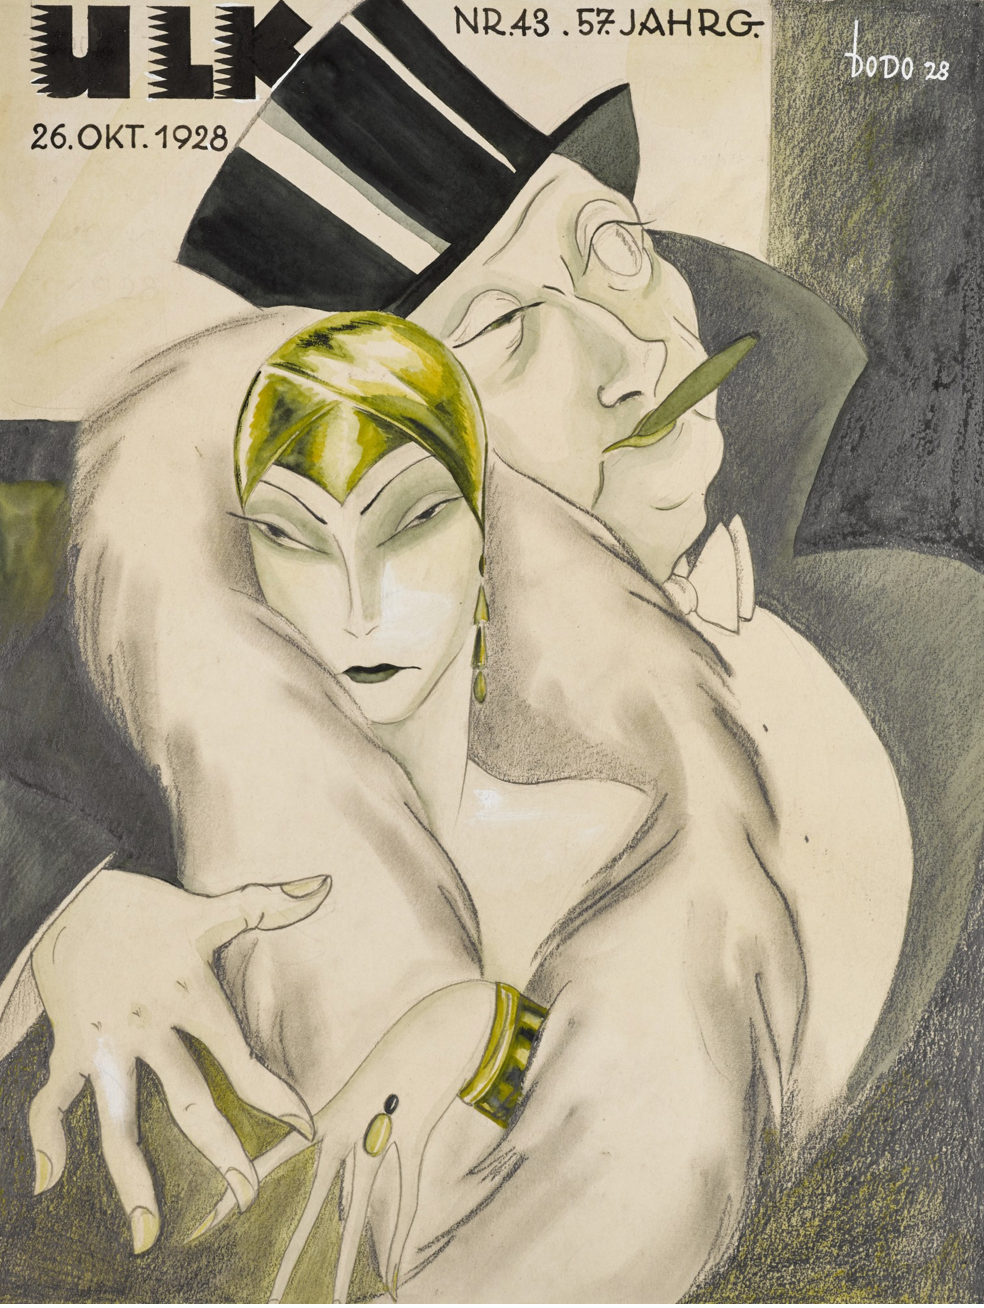 Dörte Clara Wolff: Art Deco Artist and Illustrator